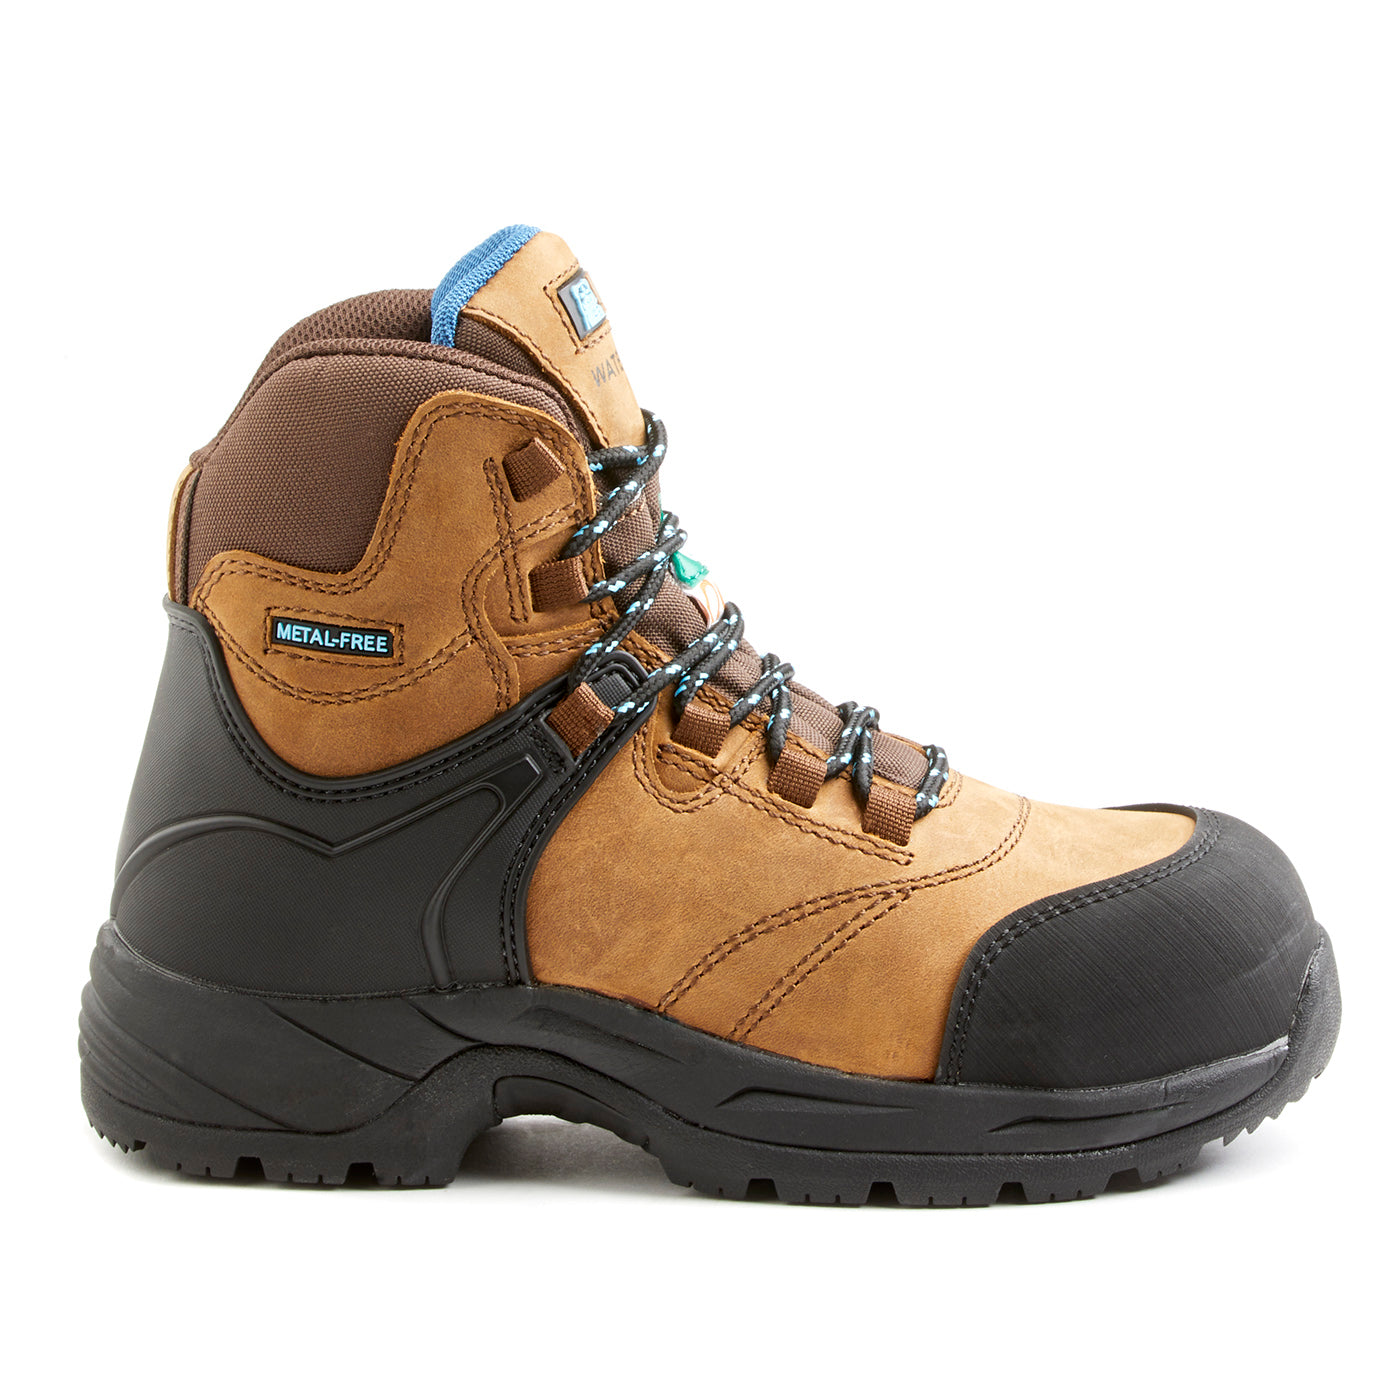 Kodiak Journey Women's Composite Toe 6" Hiker Safety Work Boots | Brown | Sizes 6 - 11 Work Boots - Cleanflow